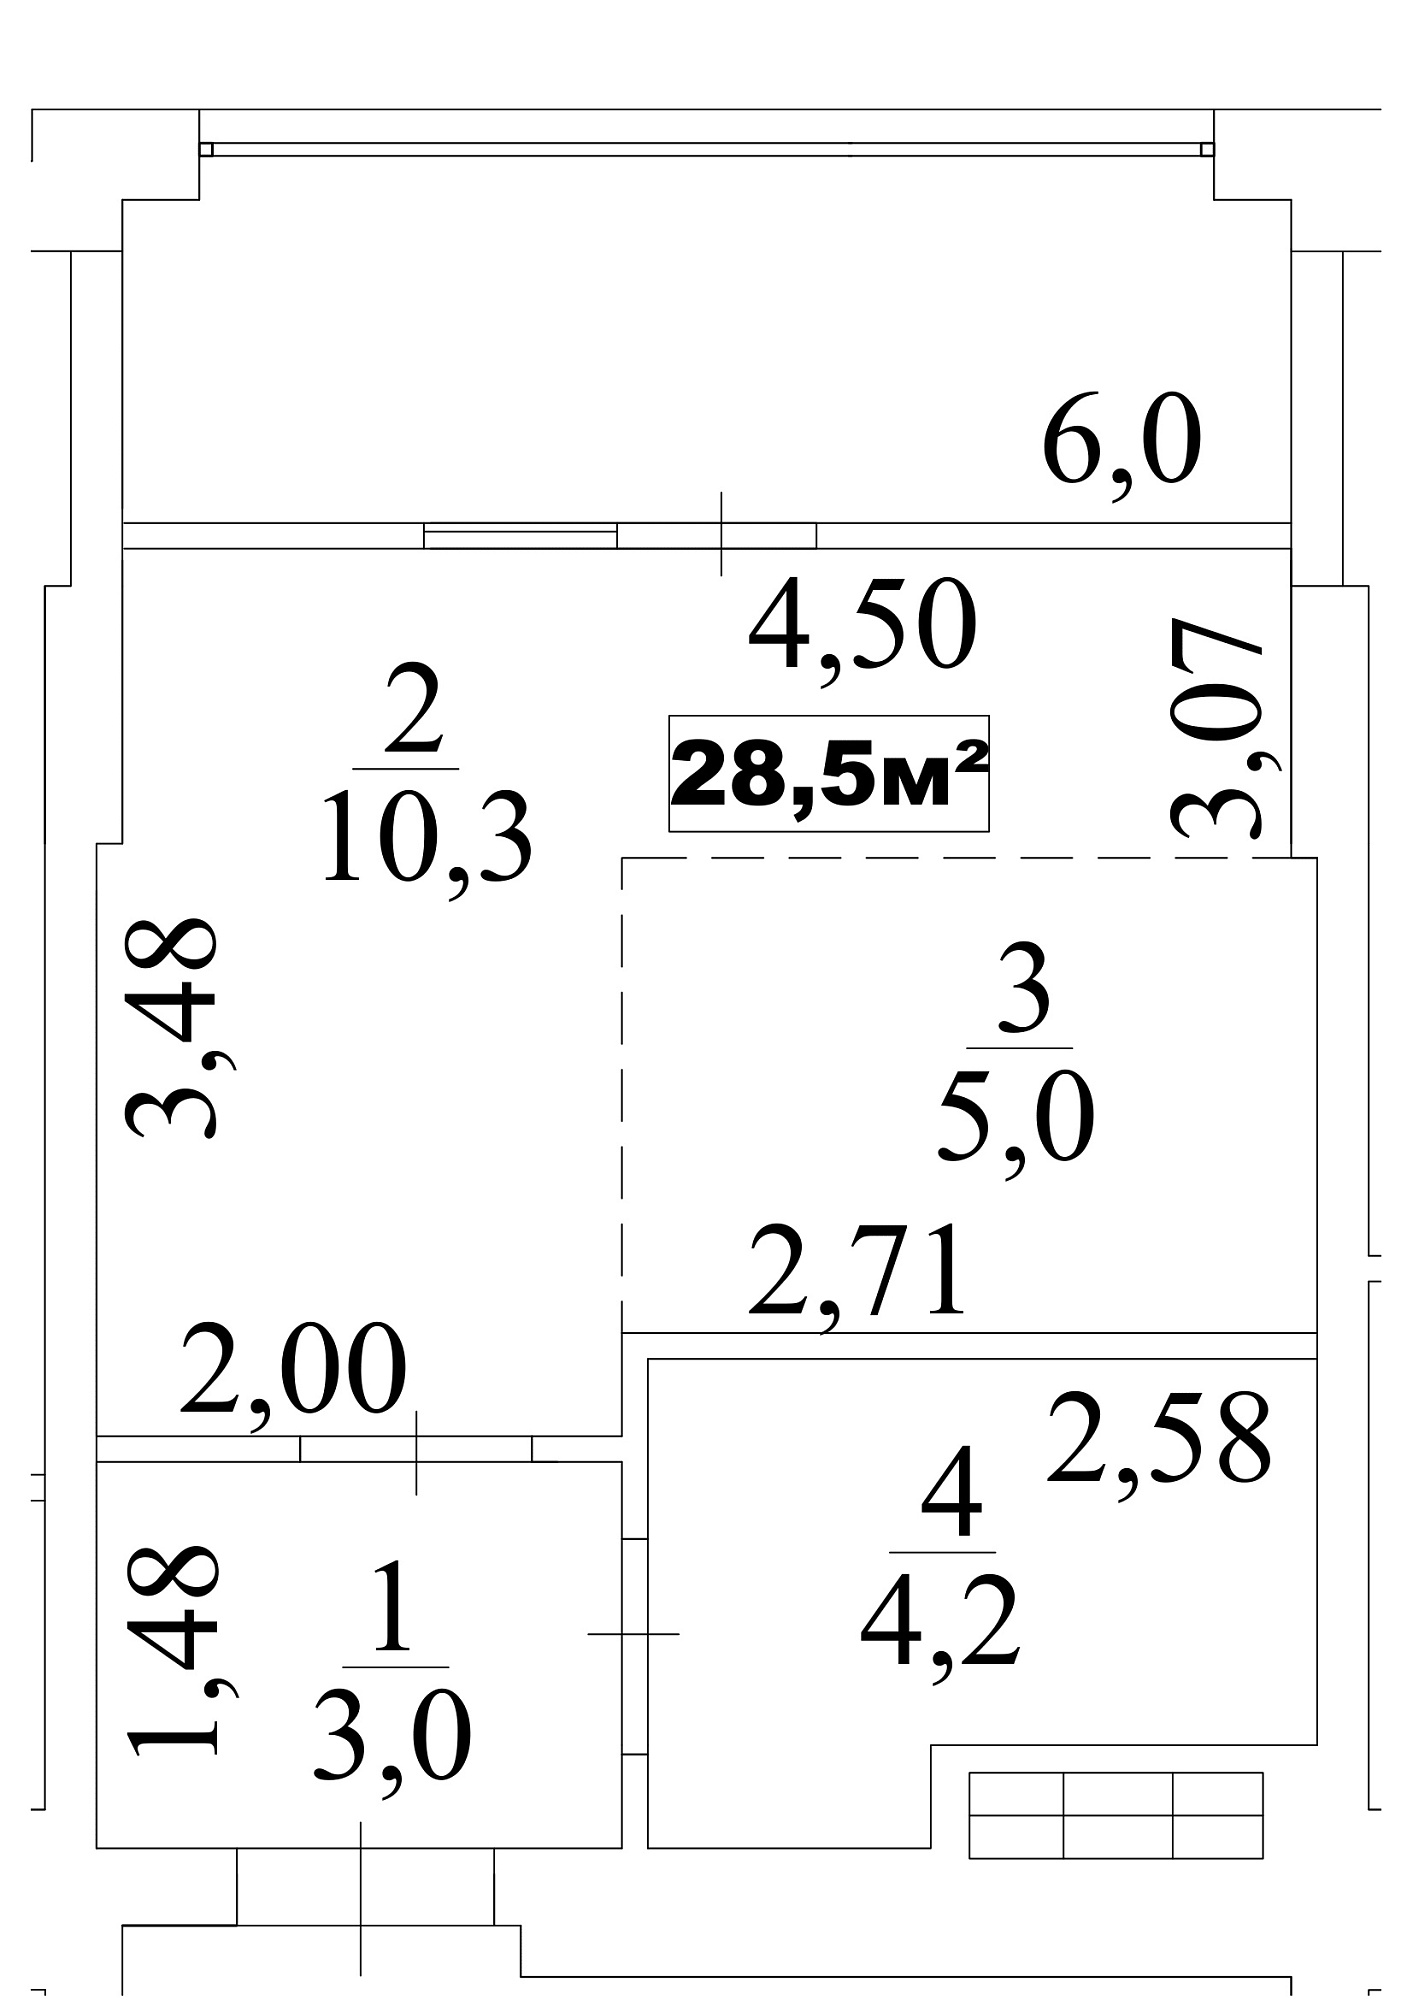 Планировка Smart-квартира площей 28.5м2, AB-10-03/00023.